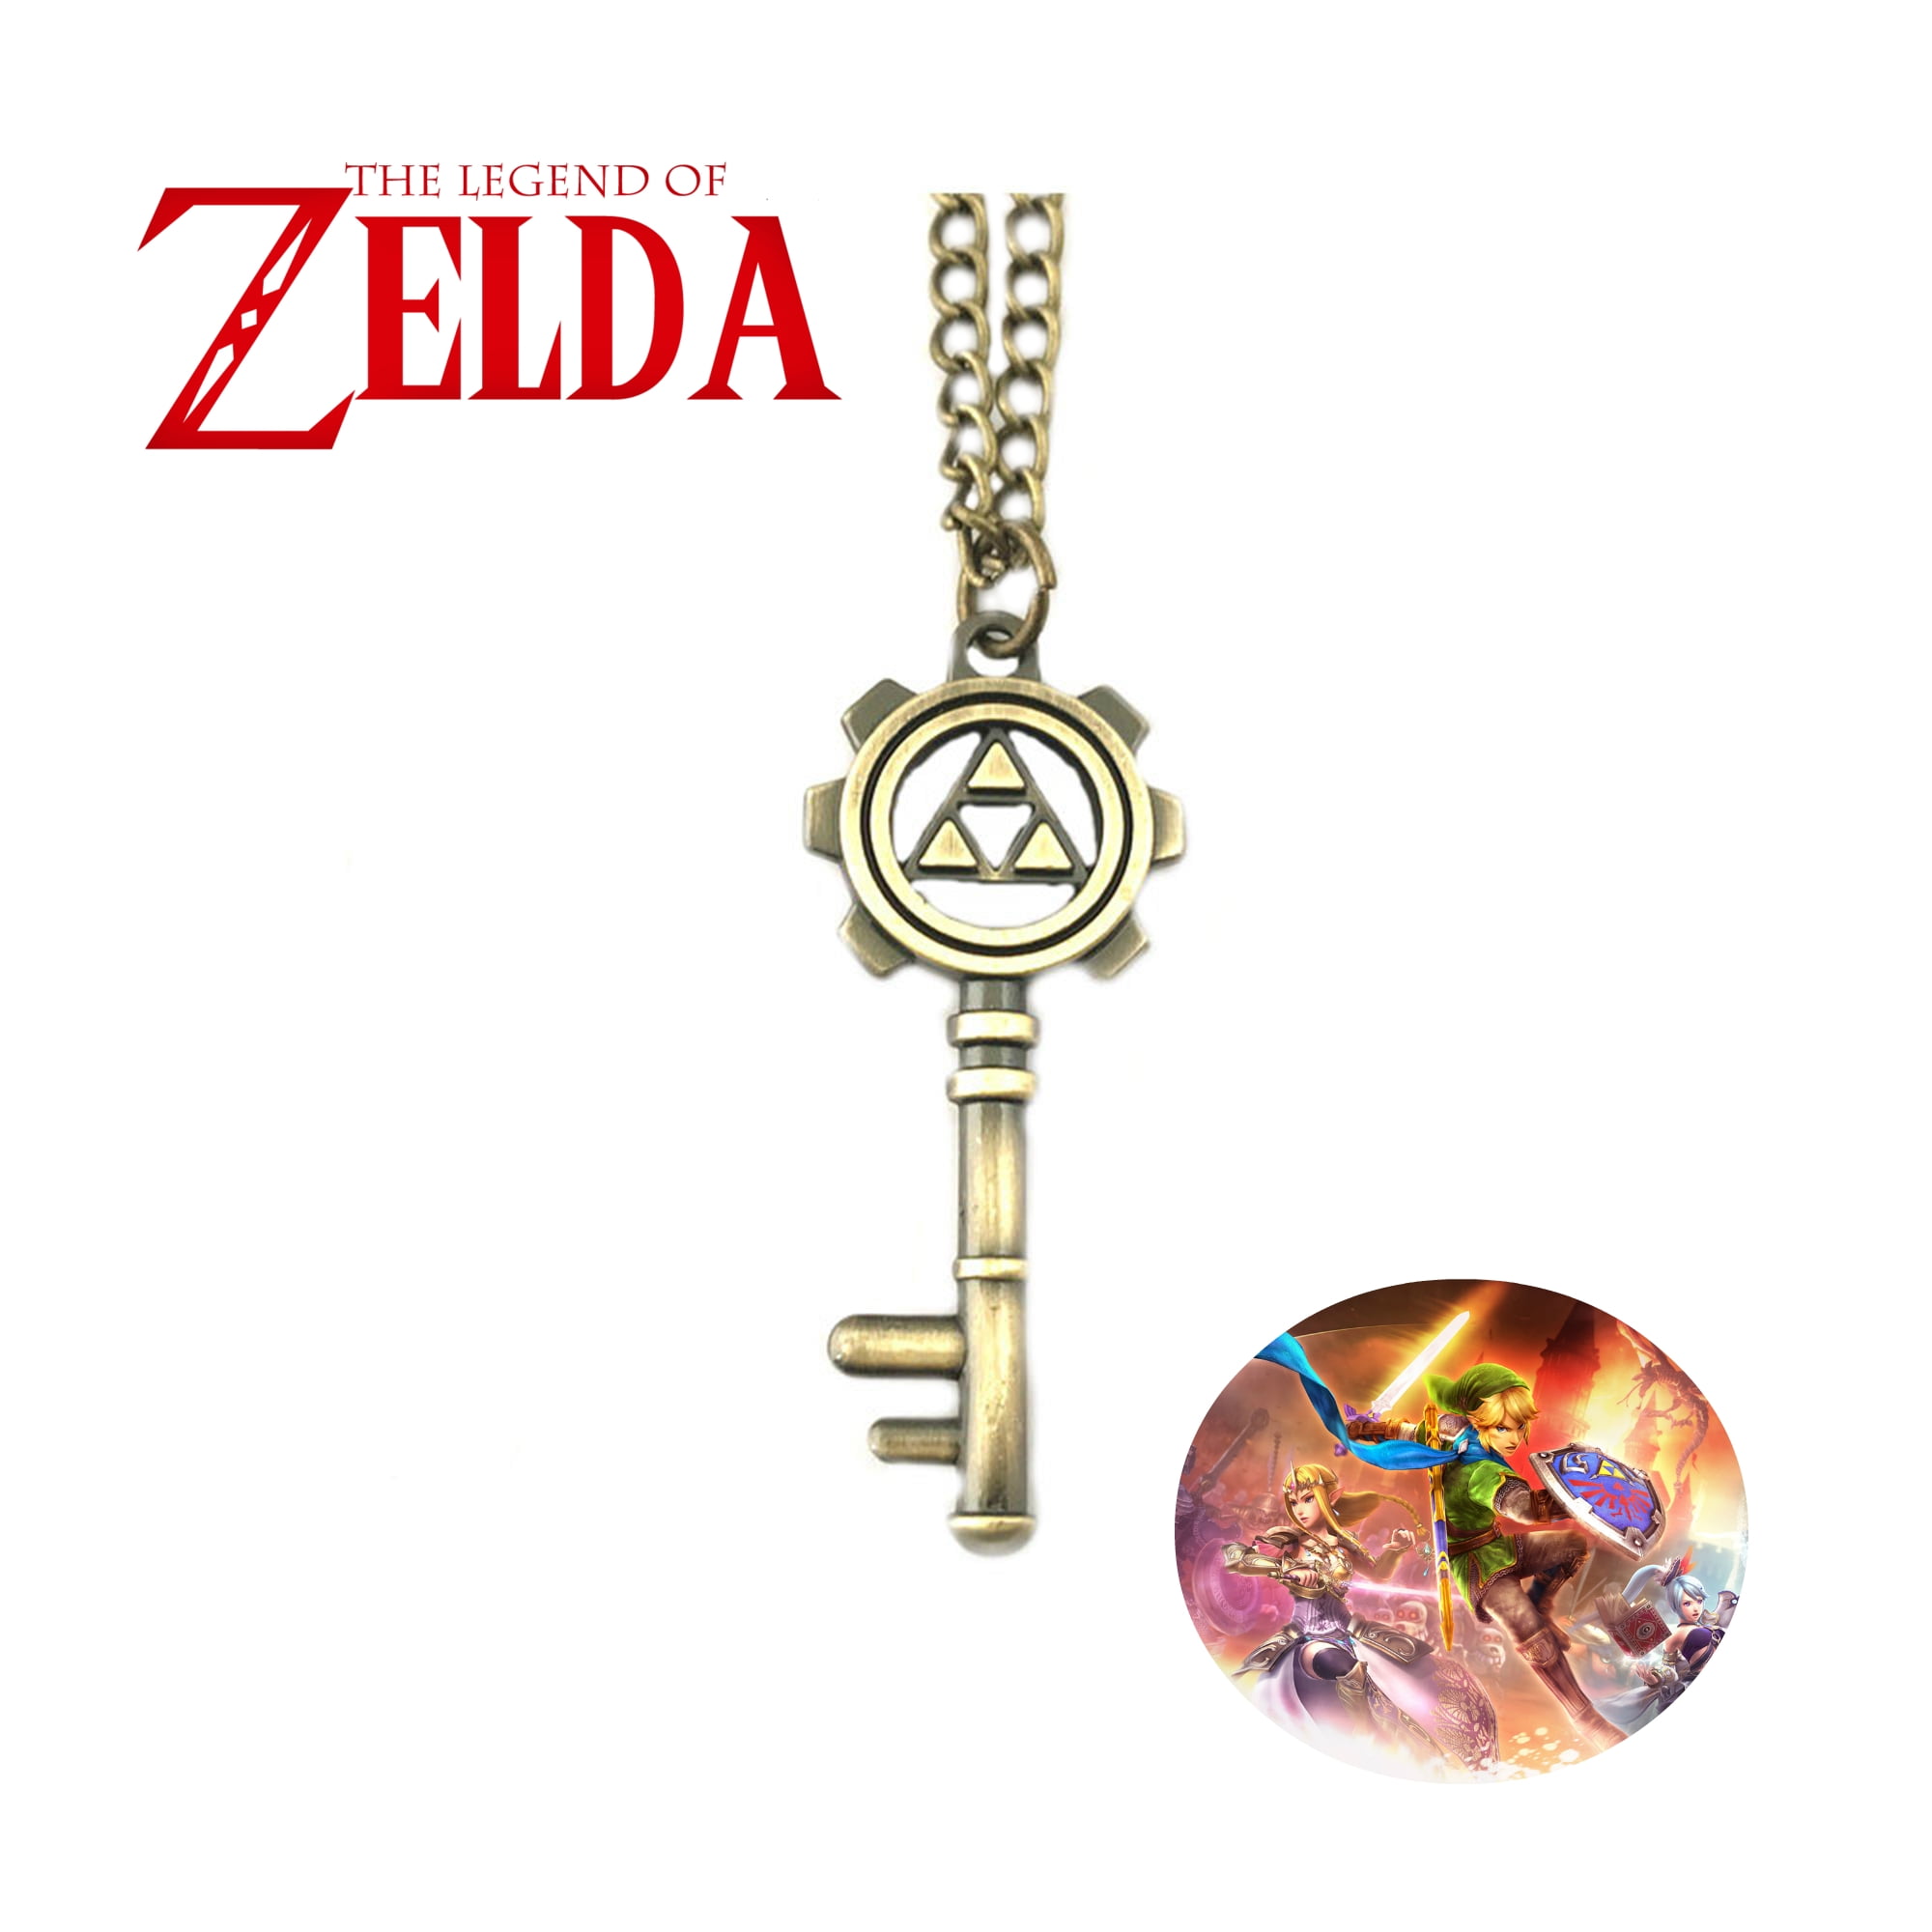 Legend Zelda Necklace Pendant - Bronze Triforce Key- Video Games Cosplay Jewelry by Superheroes - Walmart.com